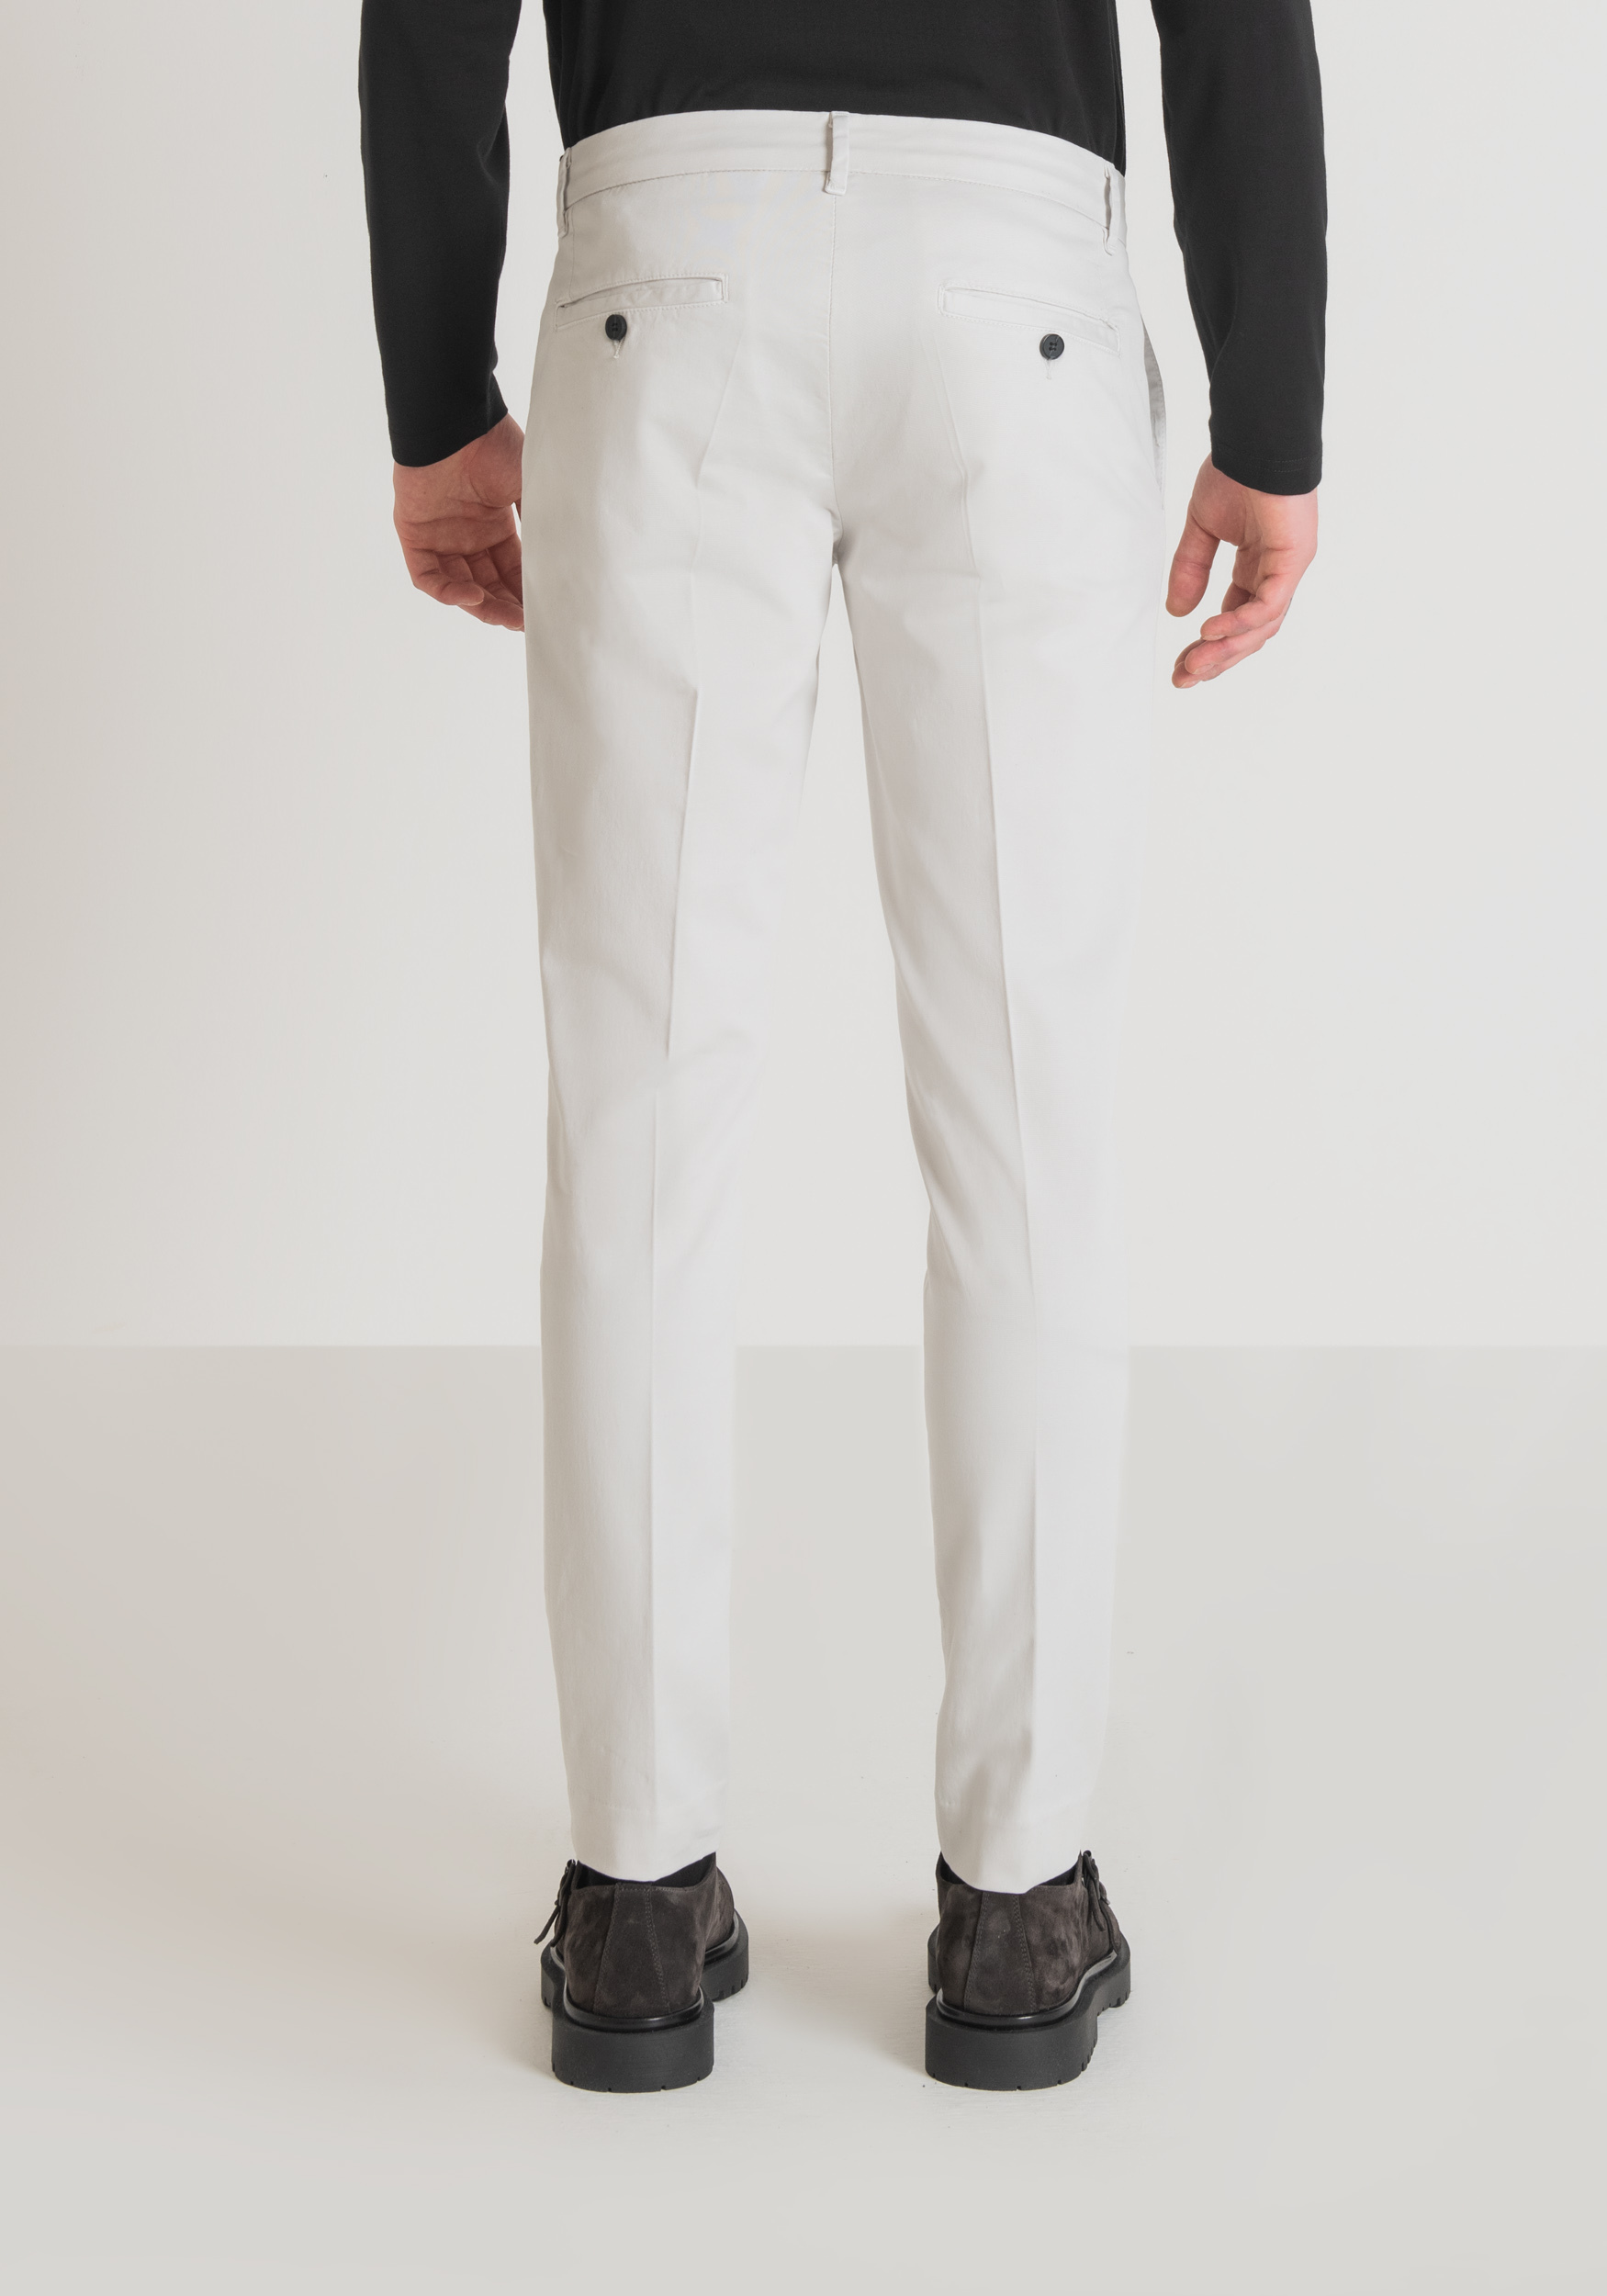 Antony Morato Pantalon Skinny Fit Bryan En Coton Doux Elastique Micro-Armure Glace | Homme Pantalons